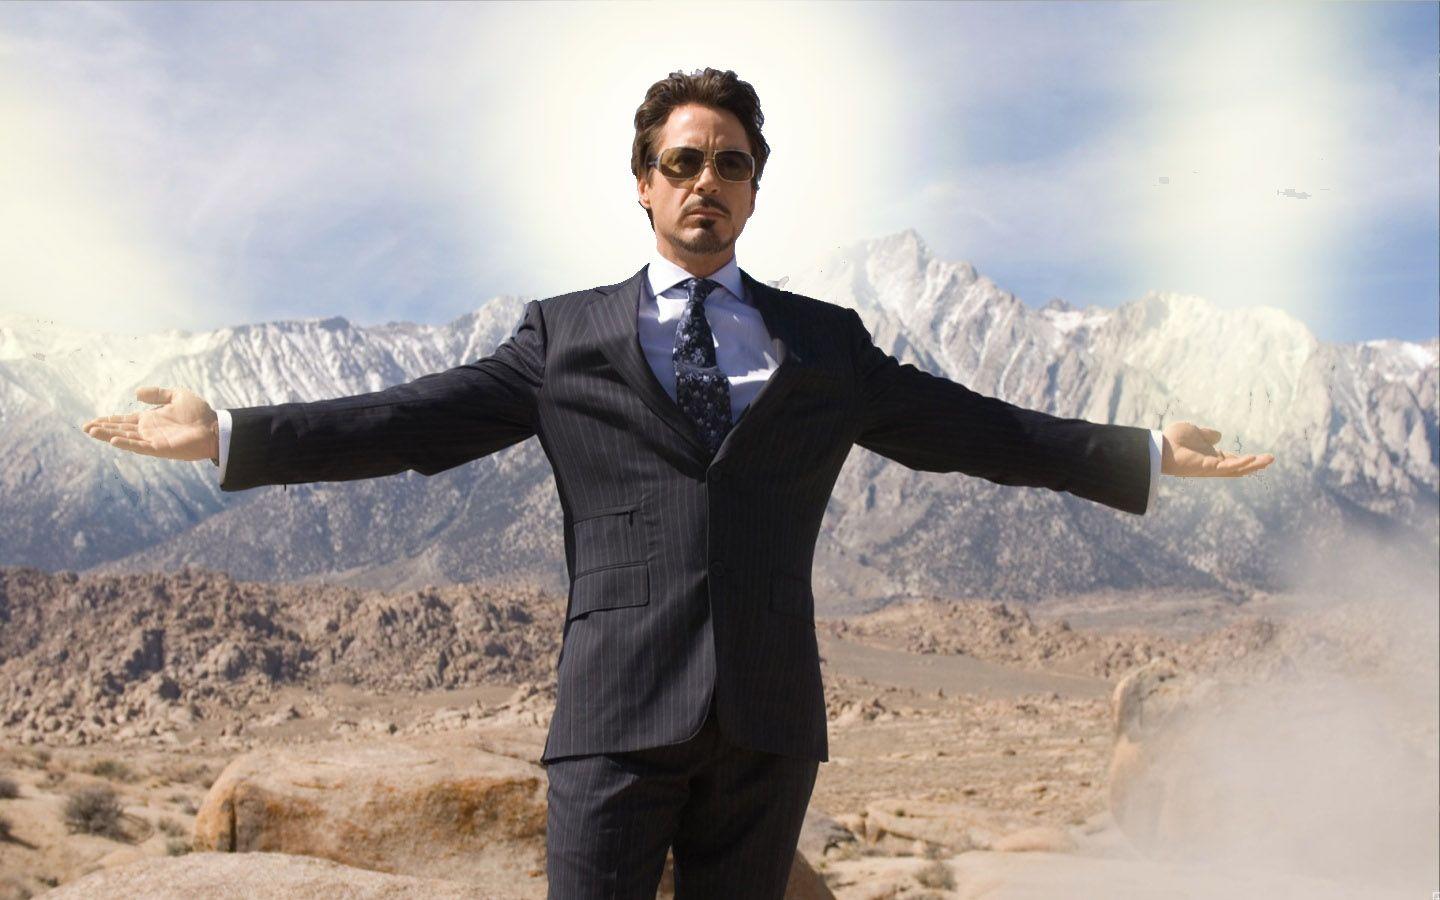 Being Iron Man IRL: How to (kinda) dress like Tony Stark